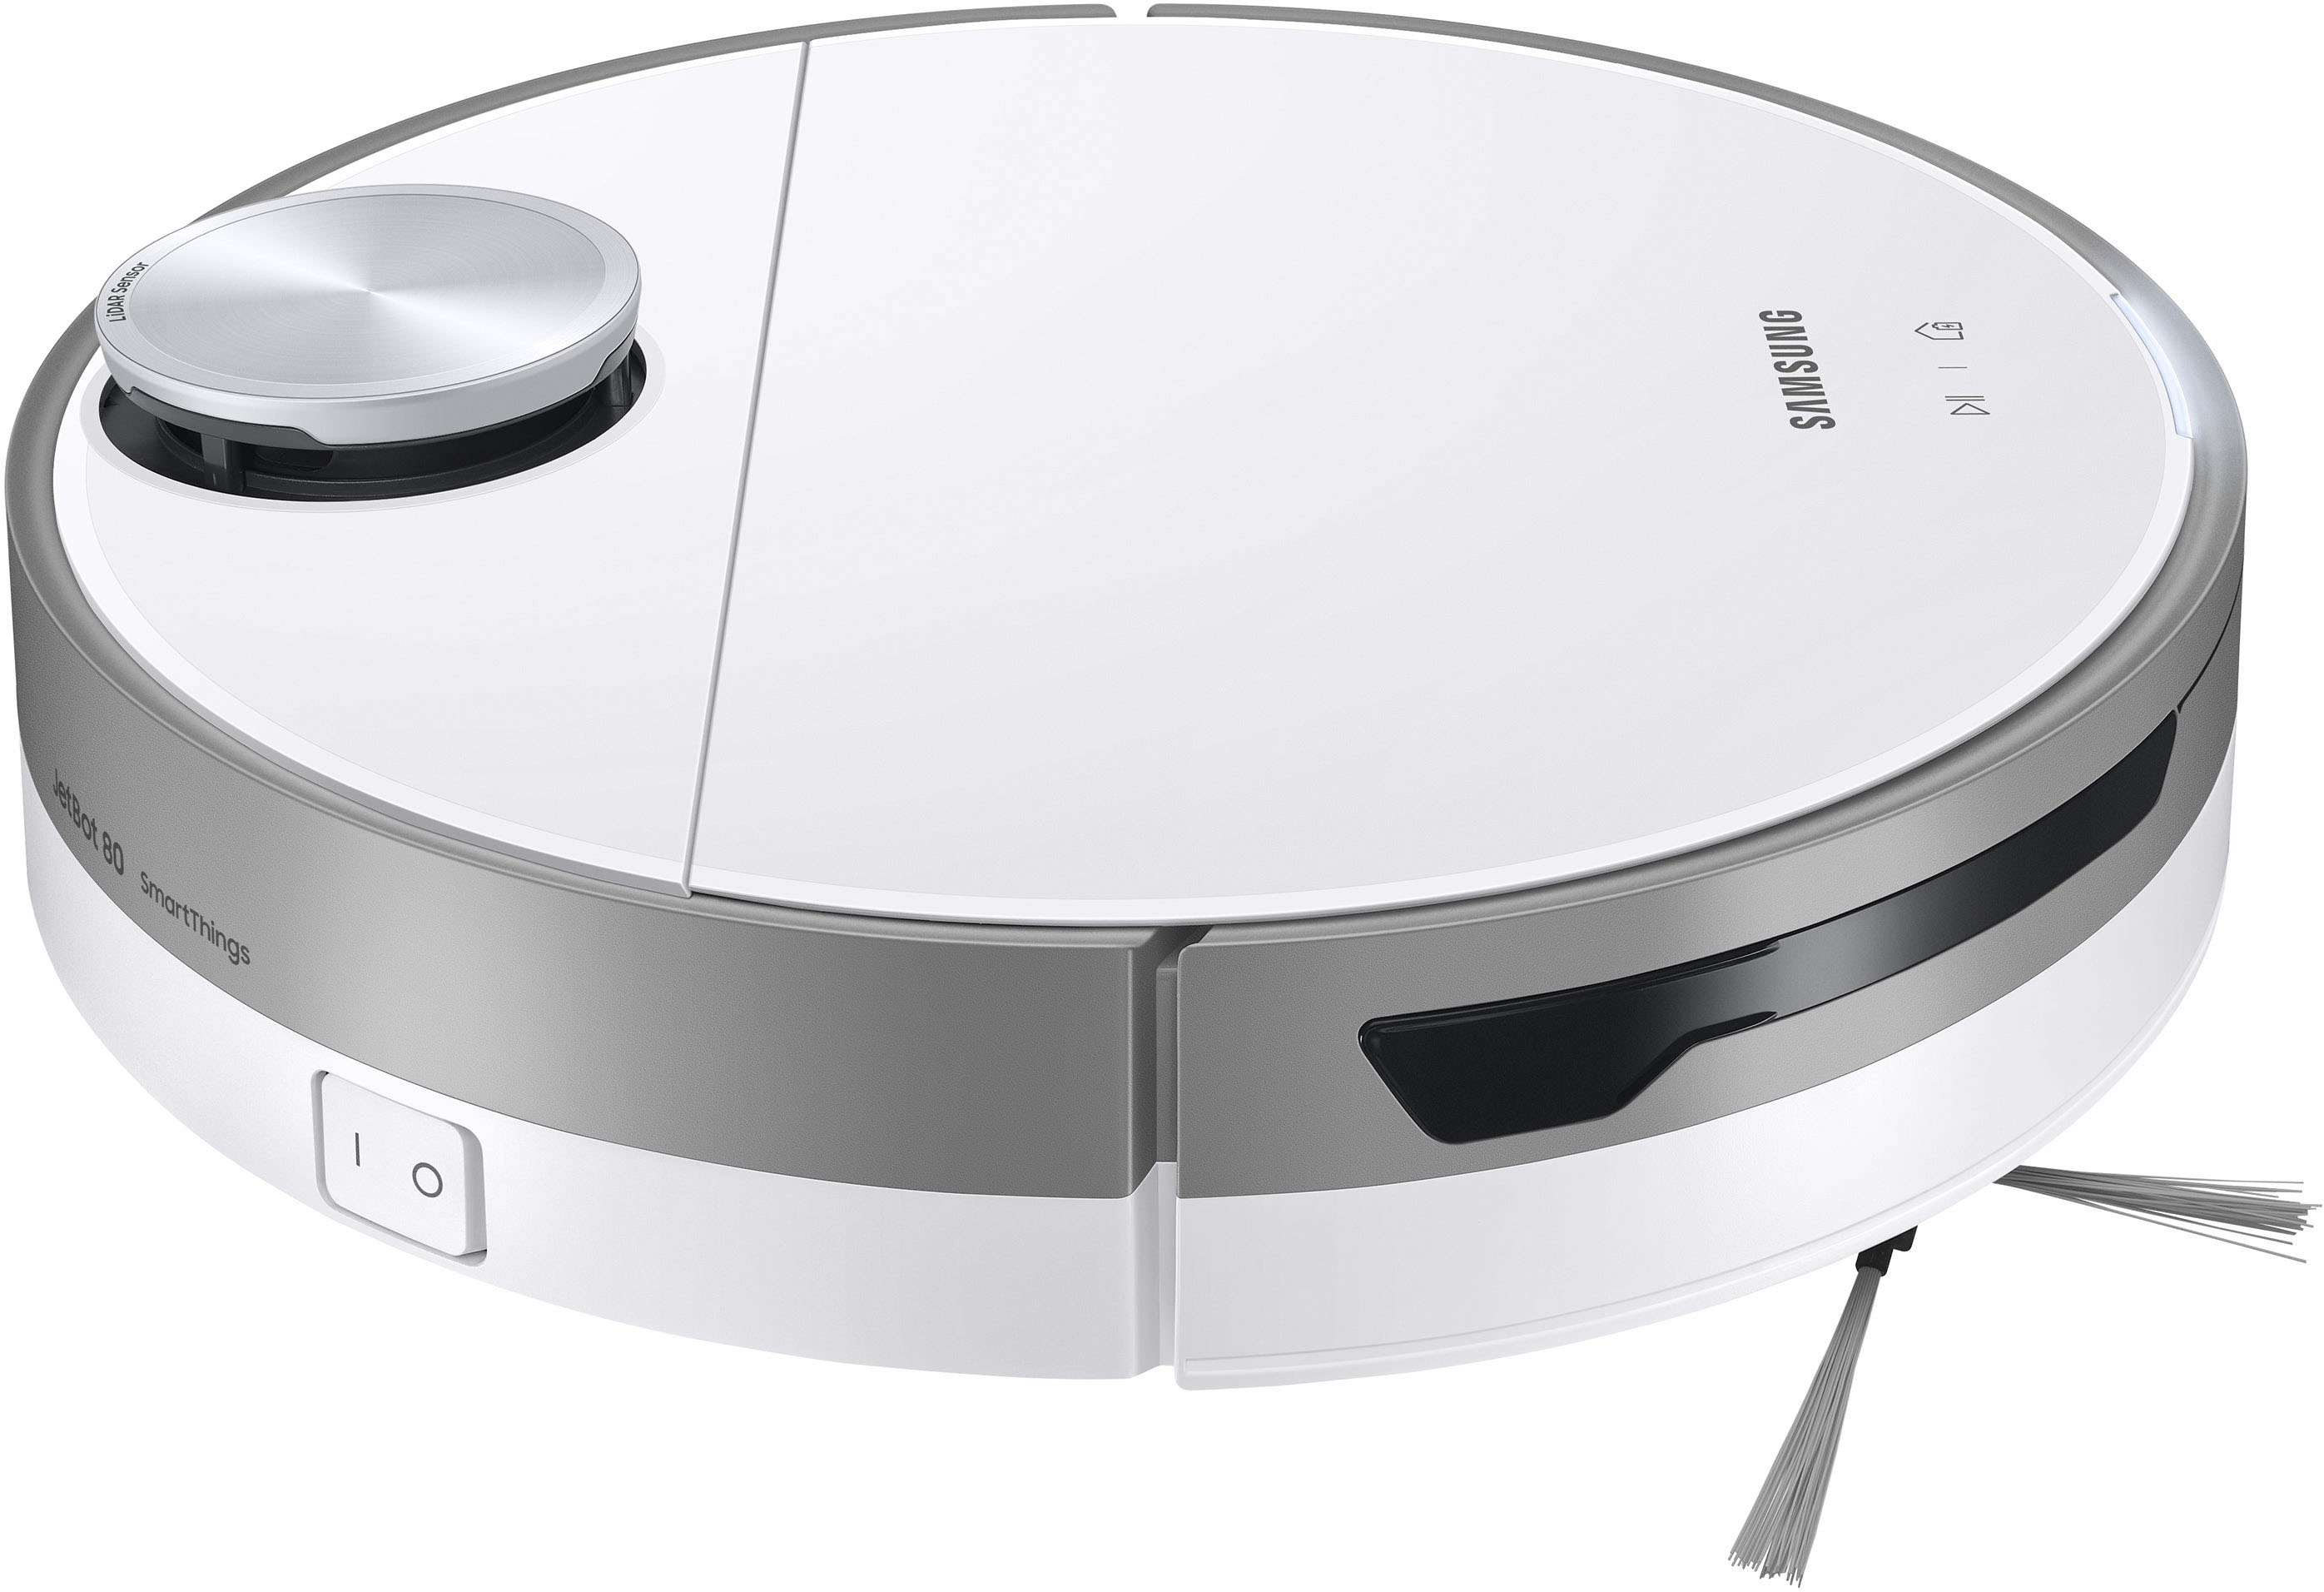 Duplicatie afgewerkt paars Samsung Jet Bot+ Robot Vacuum with Clean Station White VR30T85513W/AA -  Best Buy